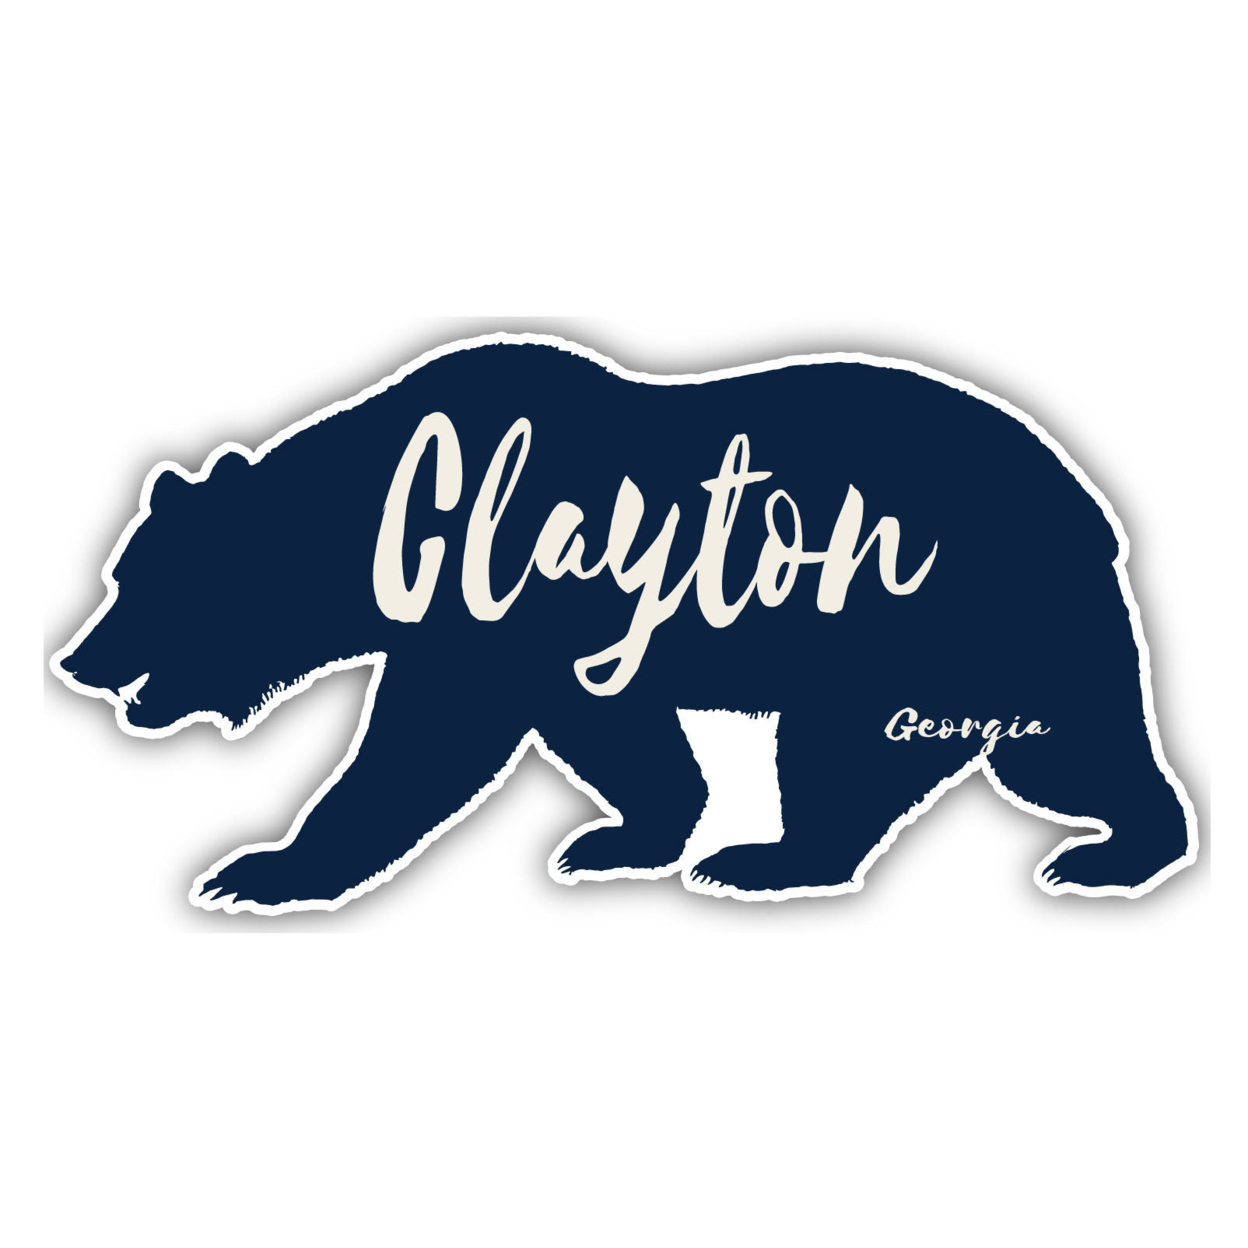 Clayton Georgia Souvenir Decorative Stickers (Choose Theme And Size) - Single Unit, 10-Inch, Bear